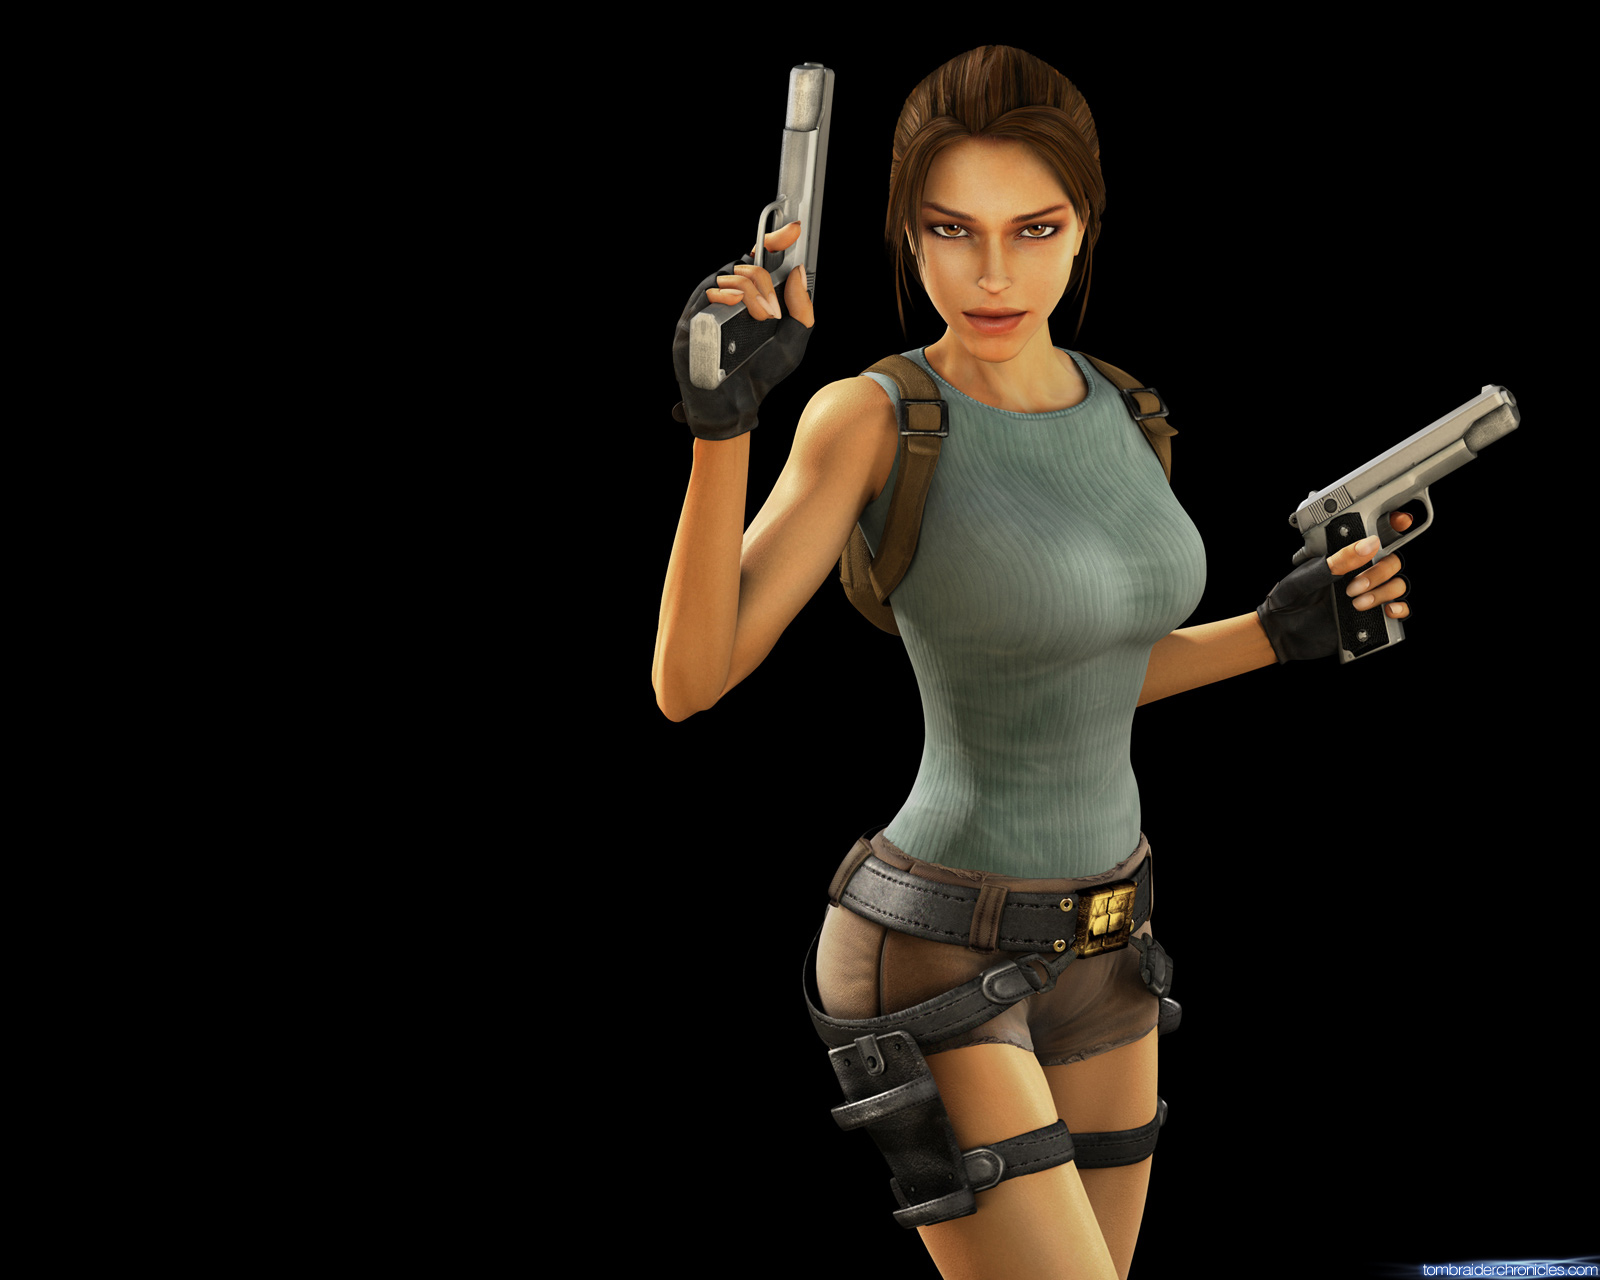 Lara Croft in high definition desktop wallpaper.